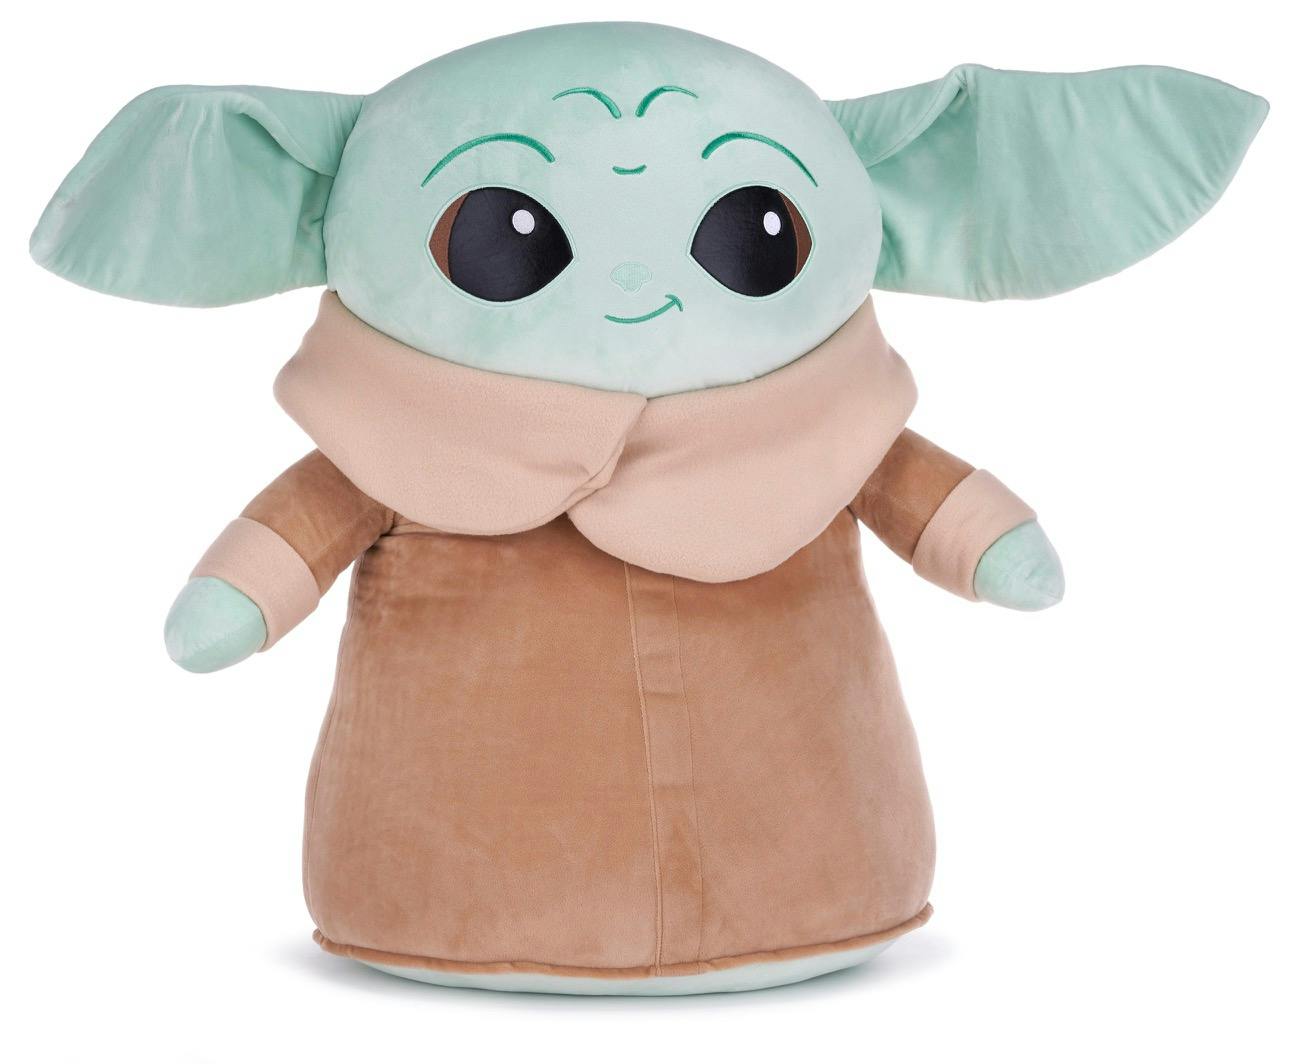 Product - Baby Yoda